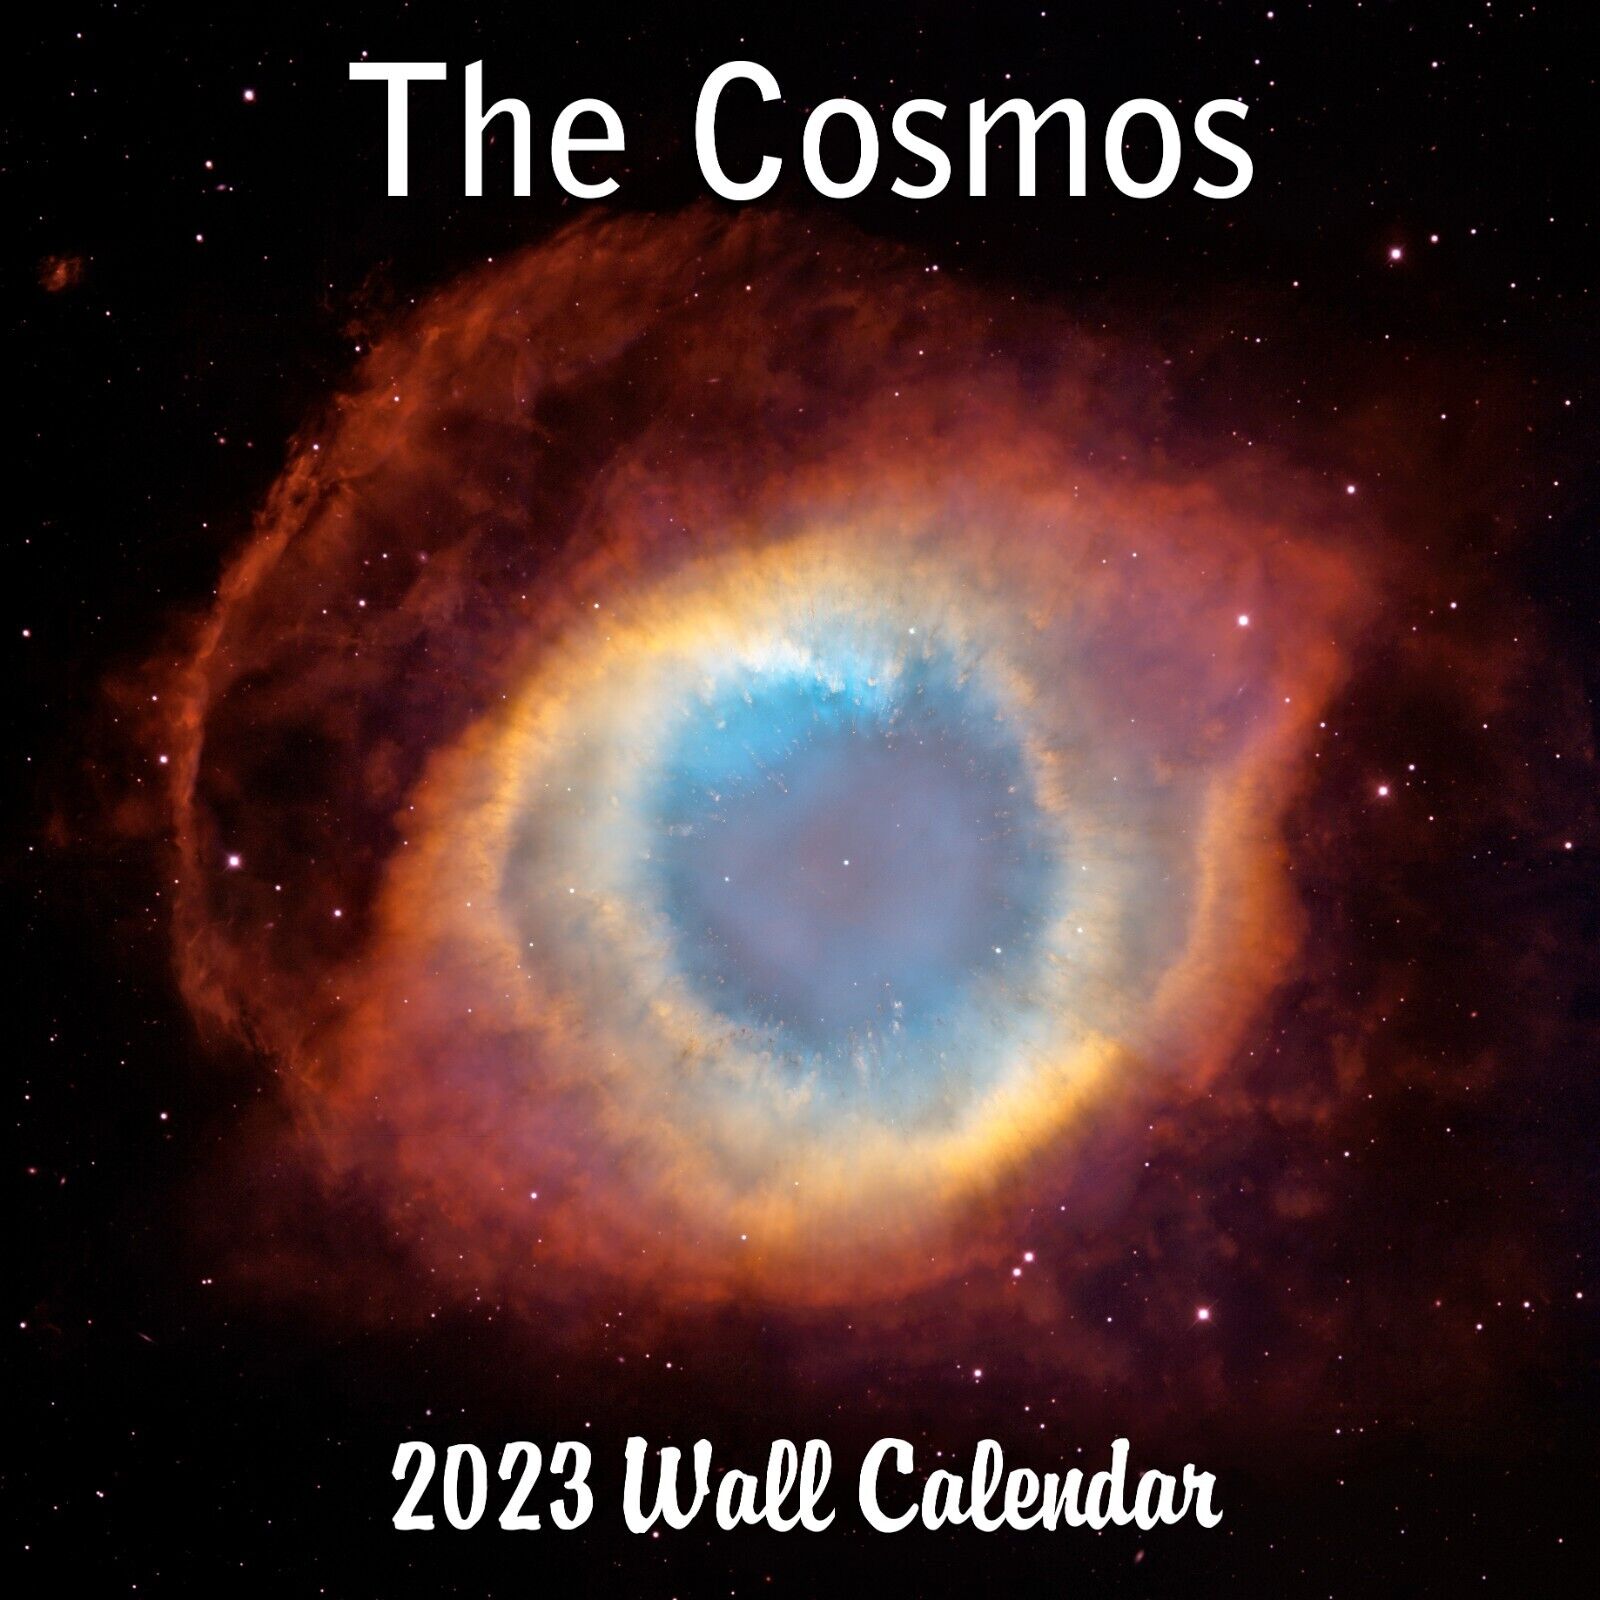 2023 The Cosmos Space NASA Hubble Telescope Monthly Wall Calendar 2023